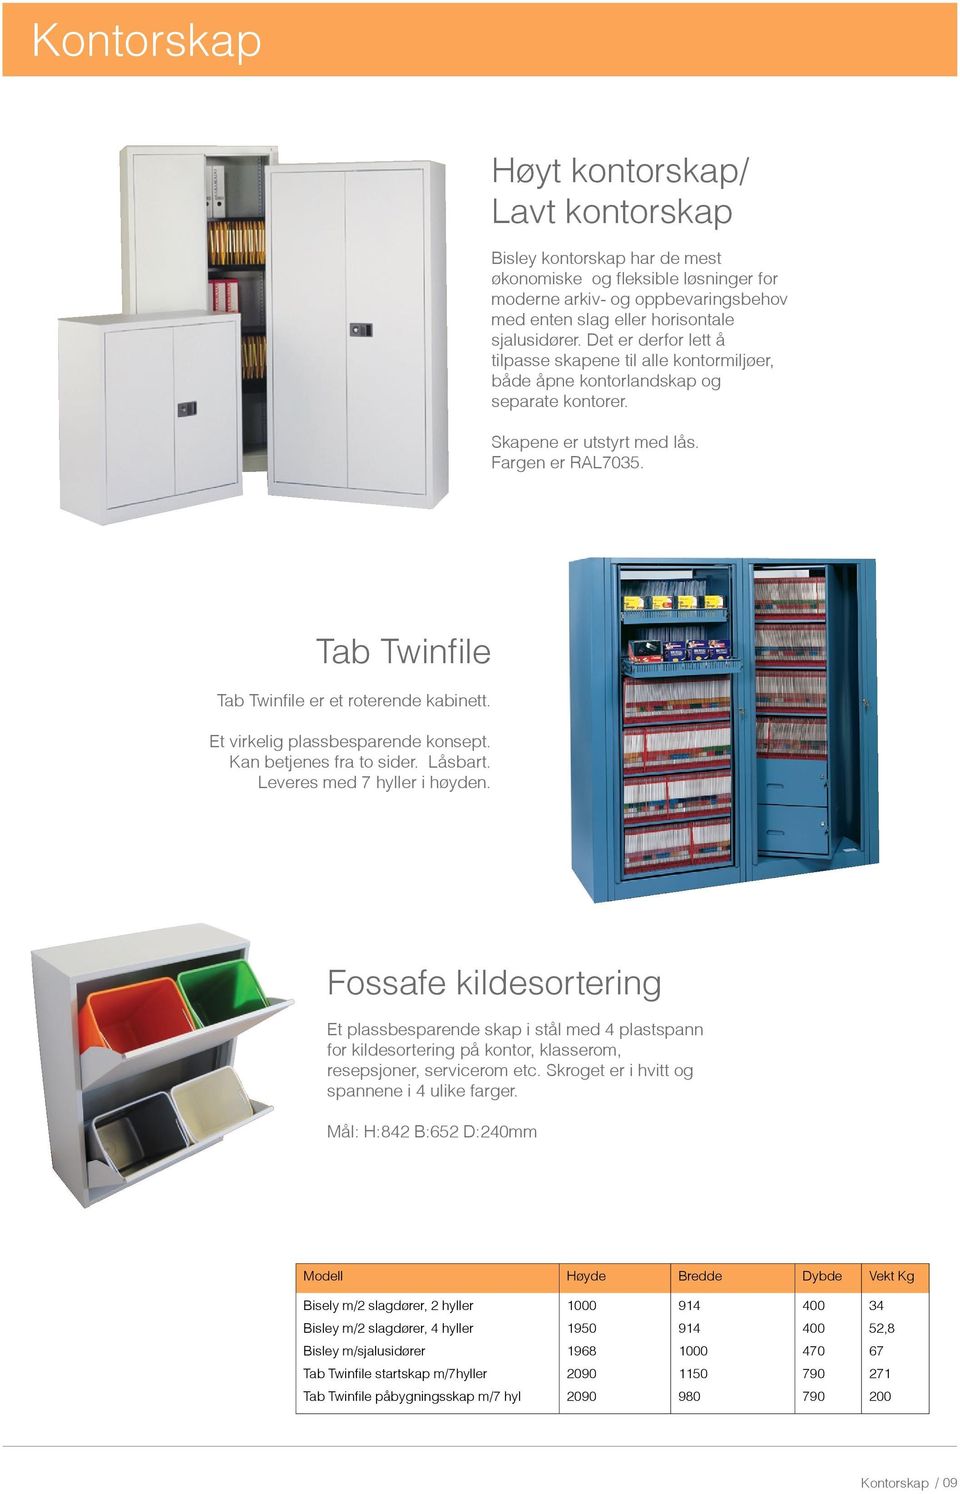 Tab Twinfile Tab Twinfile er et roterende kabinett. Et virkelig plassbesparende konsept. Kan betjenes fra to sider. Låsbart. Leveres med 7 hyller i høyden.